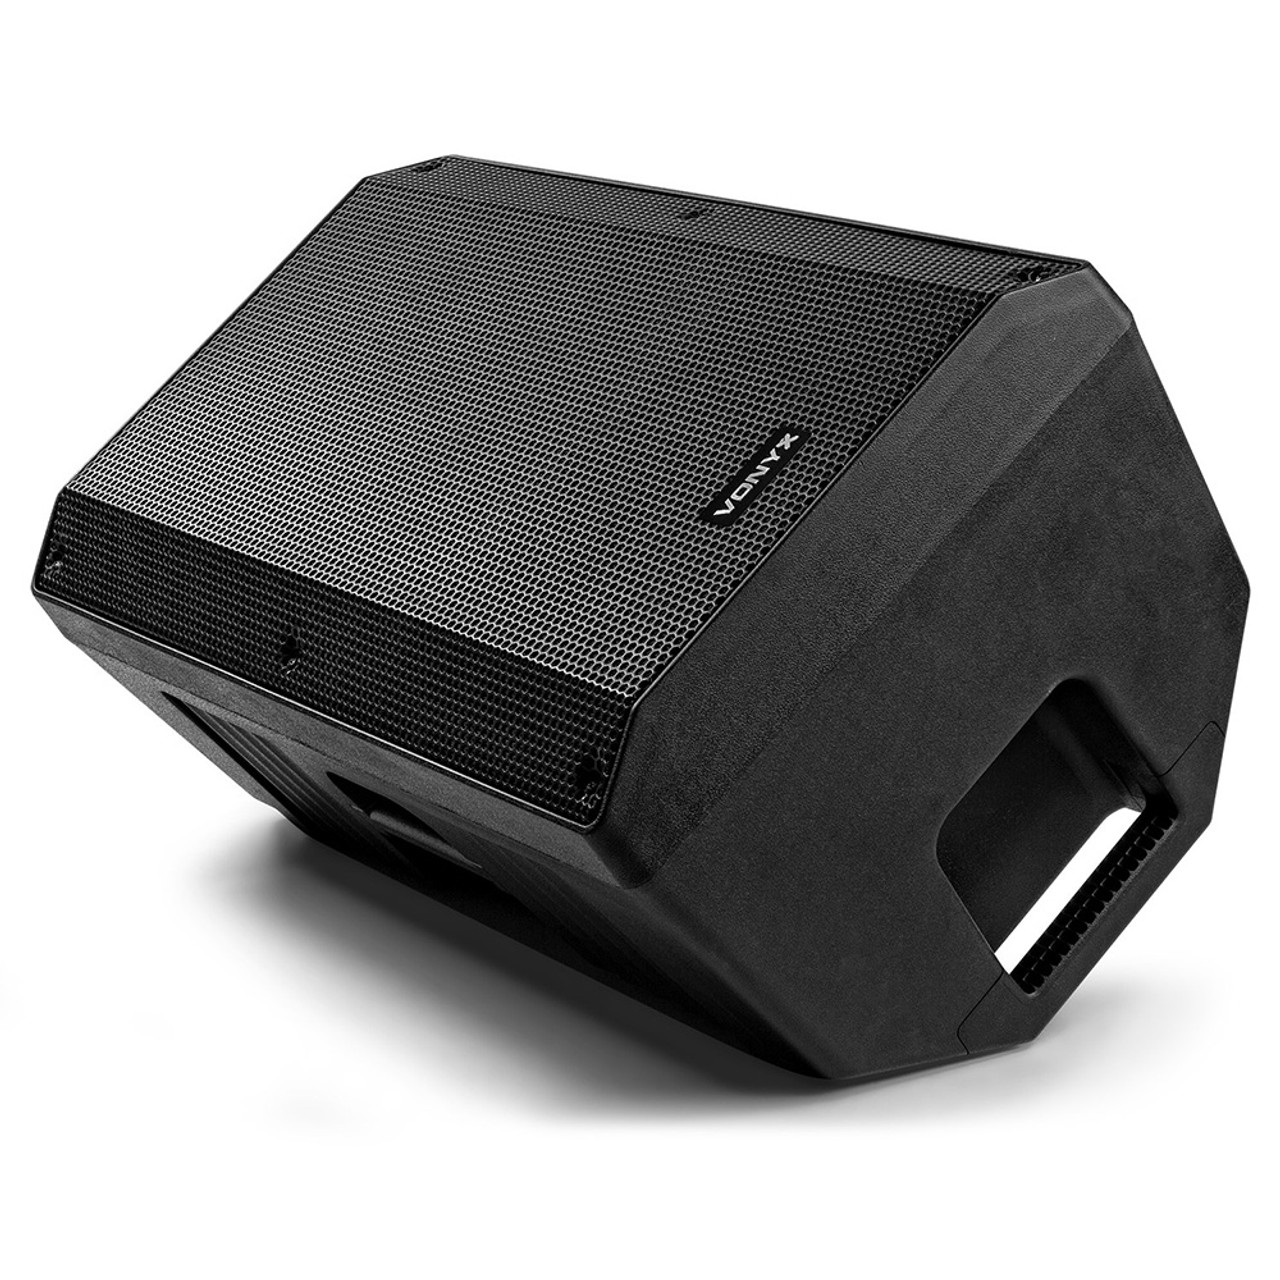 Vonyx VSA12 12" 800W Bi-Amplified Active Speaker (Each)